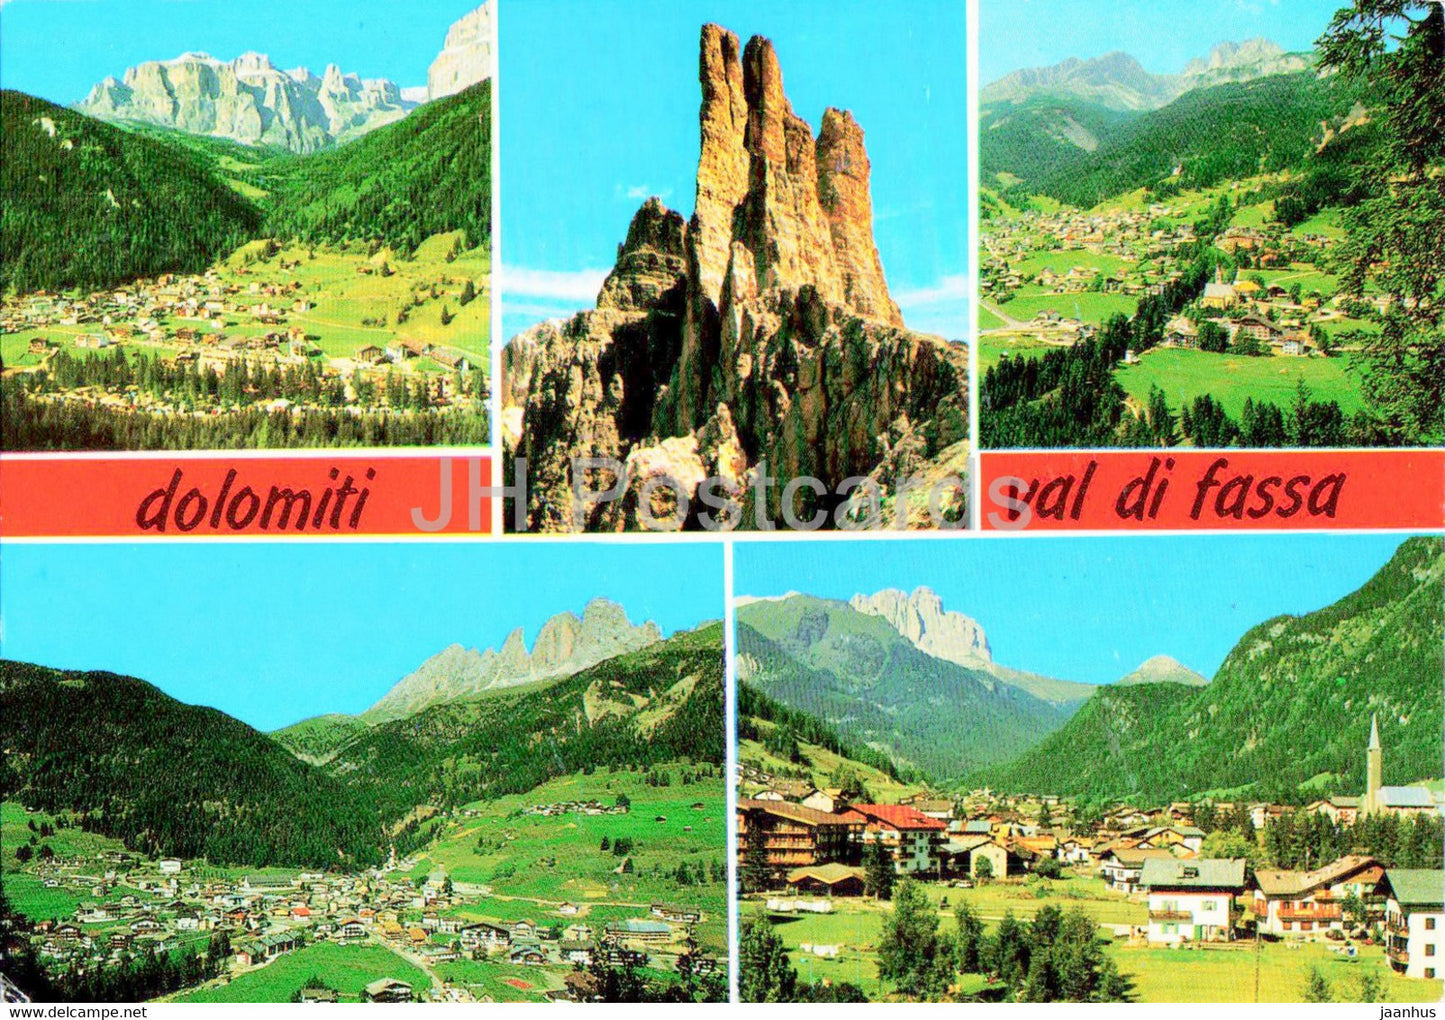 Dolomiti - Val di Fassa - 1990 - Italy - used - JH Postcards